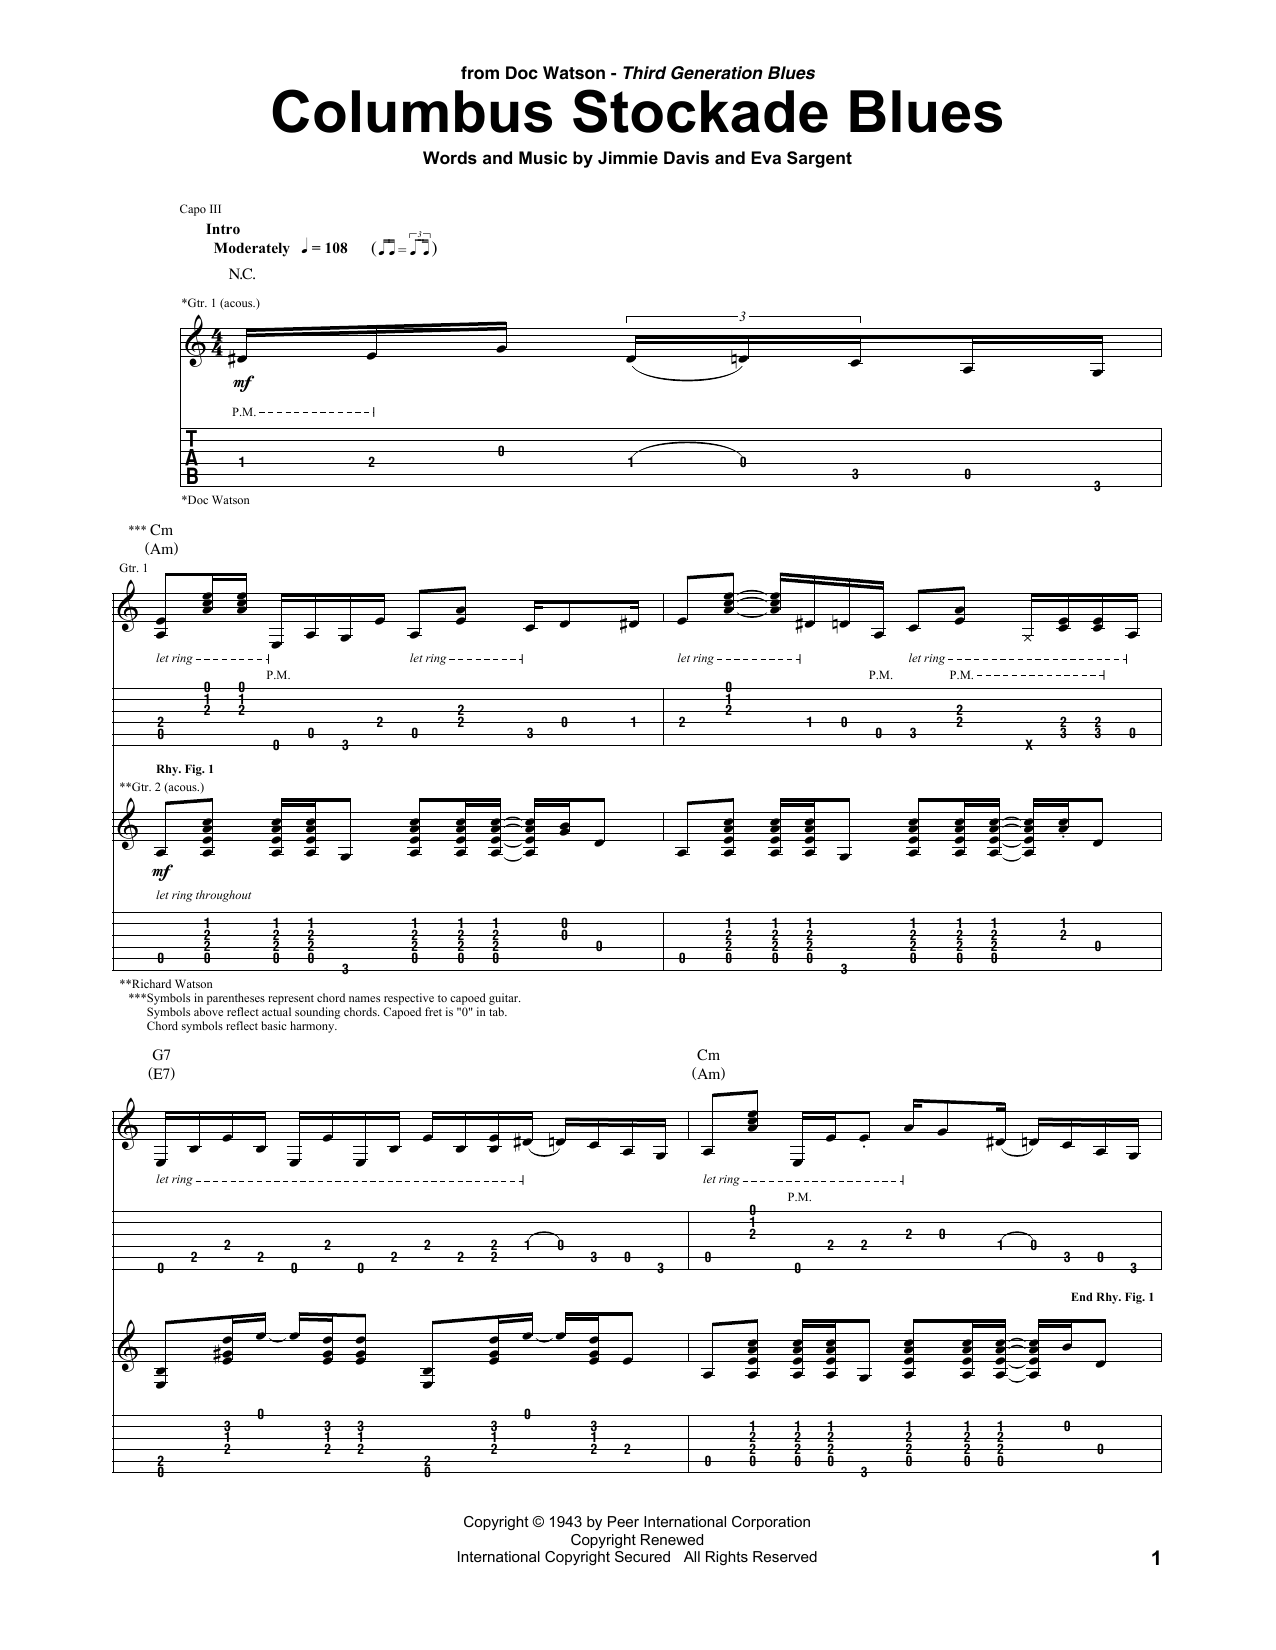 Doc Watson Columbus Stockade Blues Sheet Music Notes & Chords for Guitar Tab - Download or Print PDF